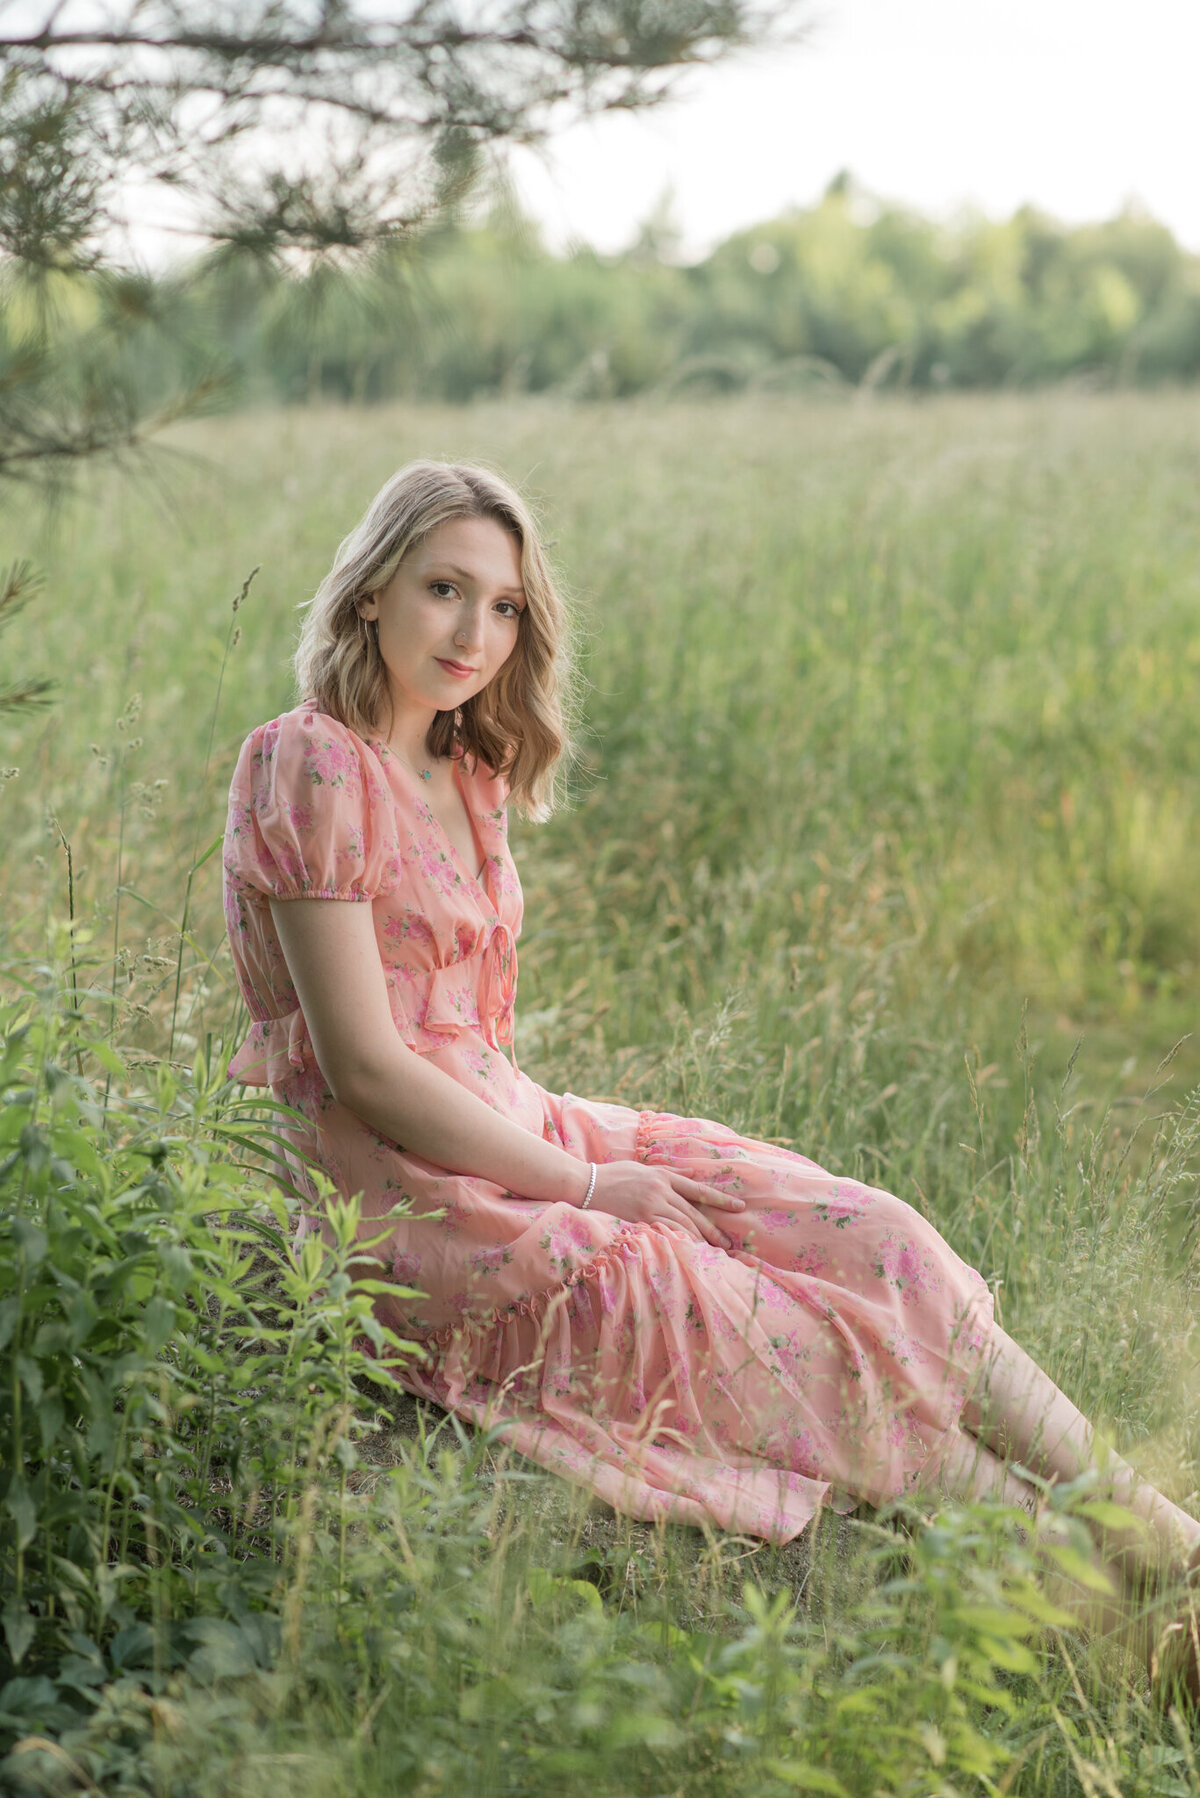 Senior girl in pink dress sitting in field